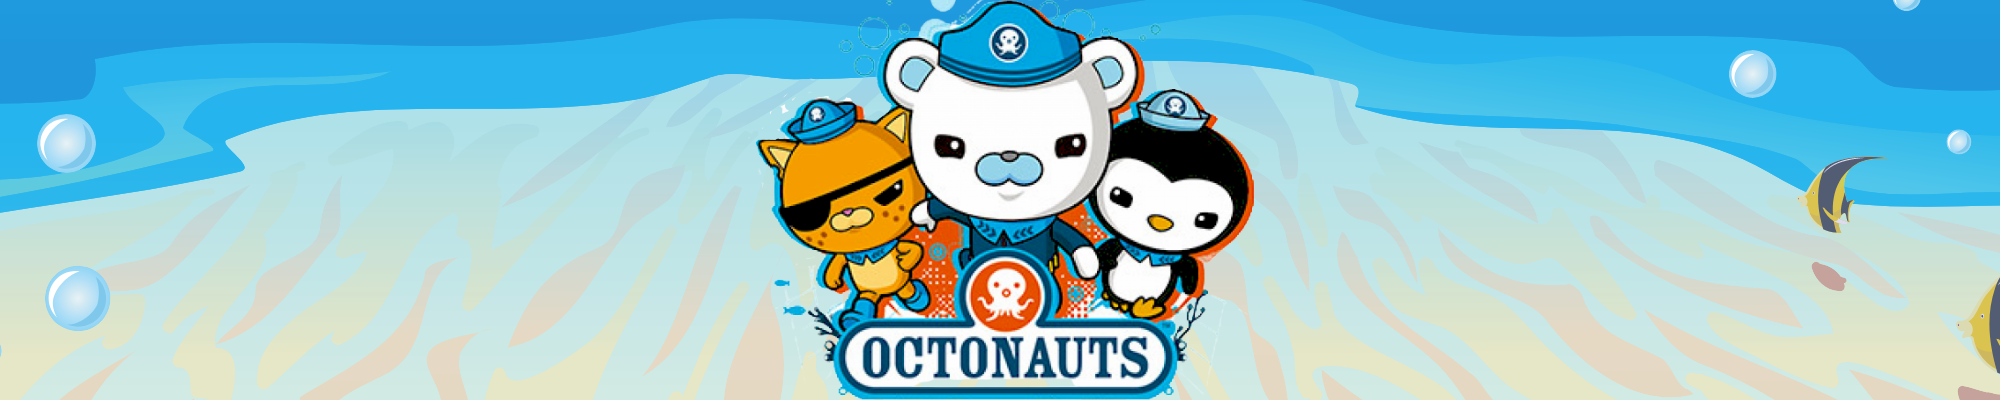 the octonauts banner